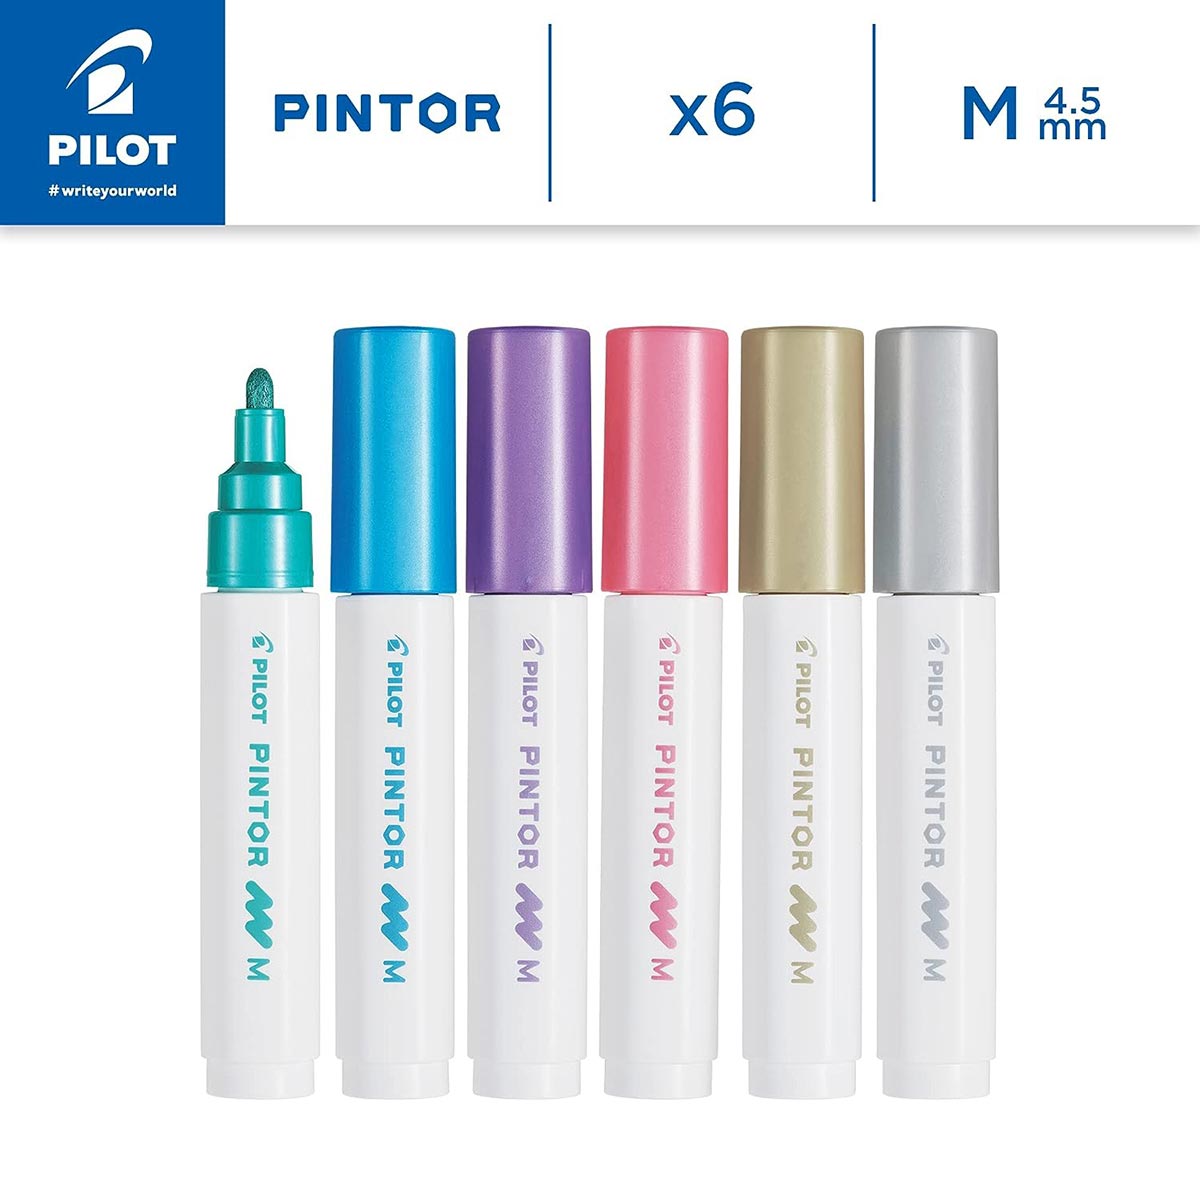 Pintor - Paint Marker Medium Tip 6 Pack - Metallic